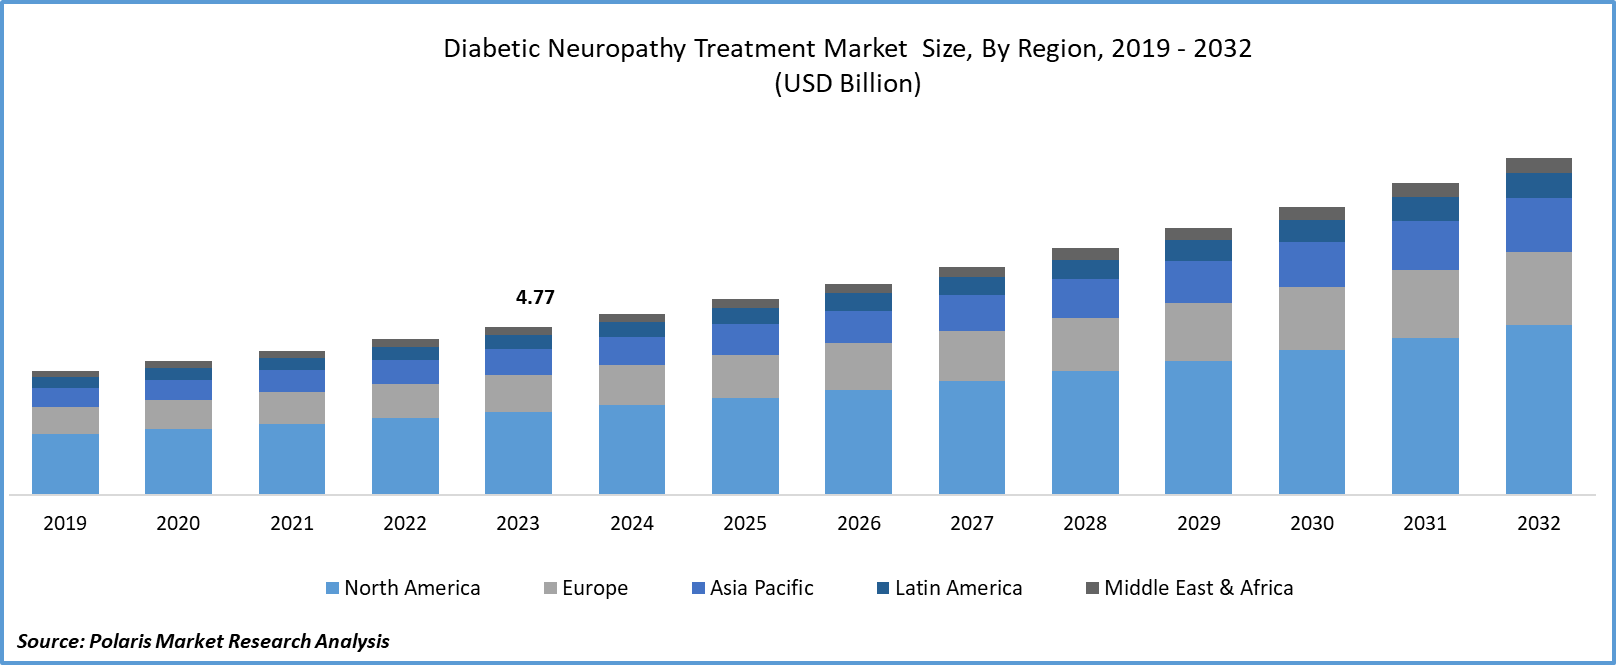 Diabetic Neuropathy Treatment Market Size